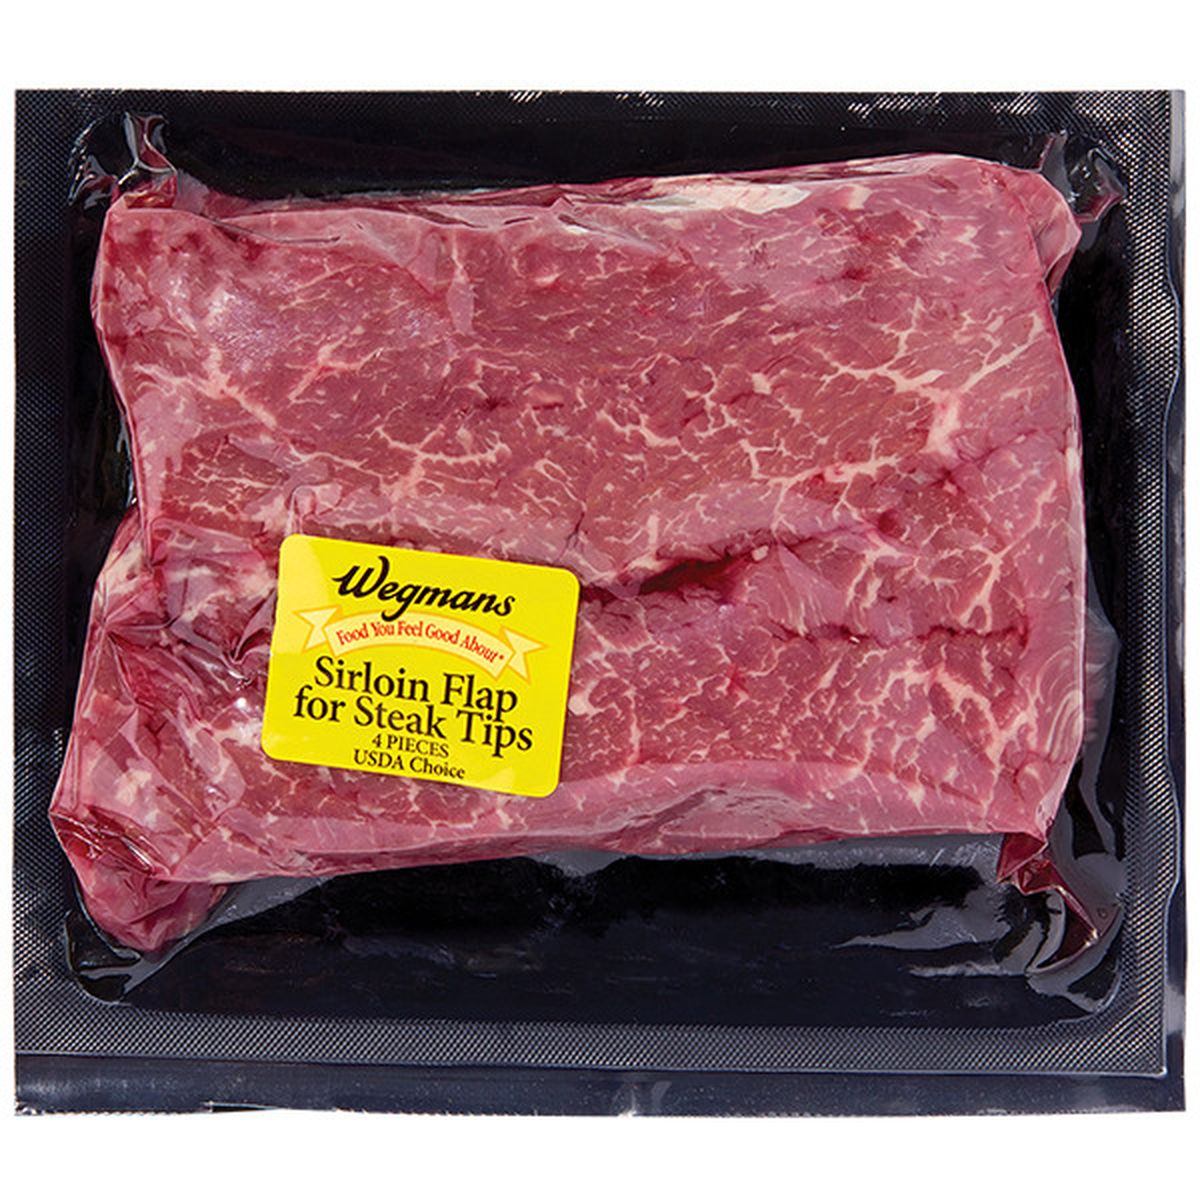 Calories in Wegmans Choice Sirloin Flap for Steak Tips